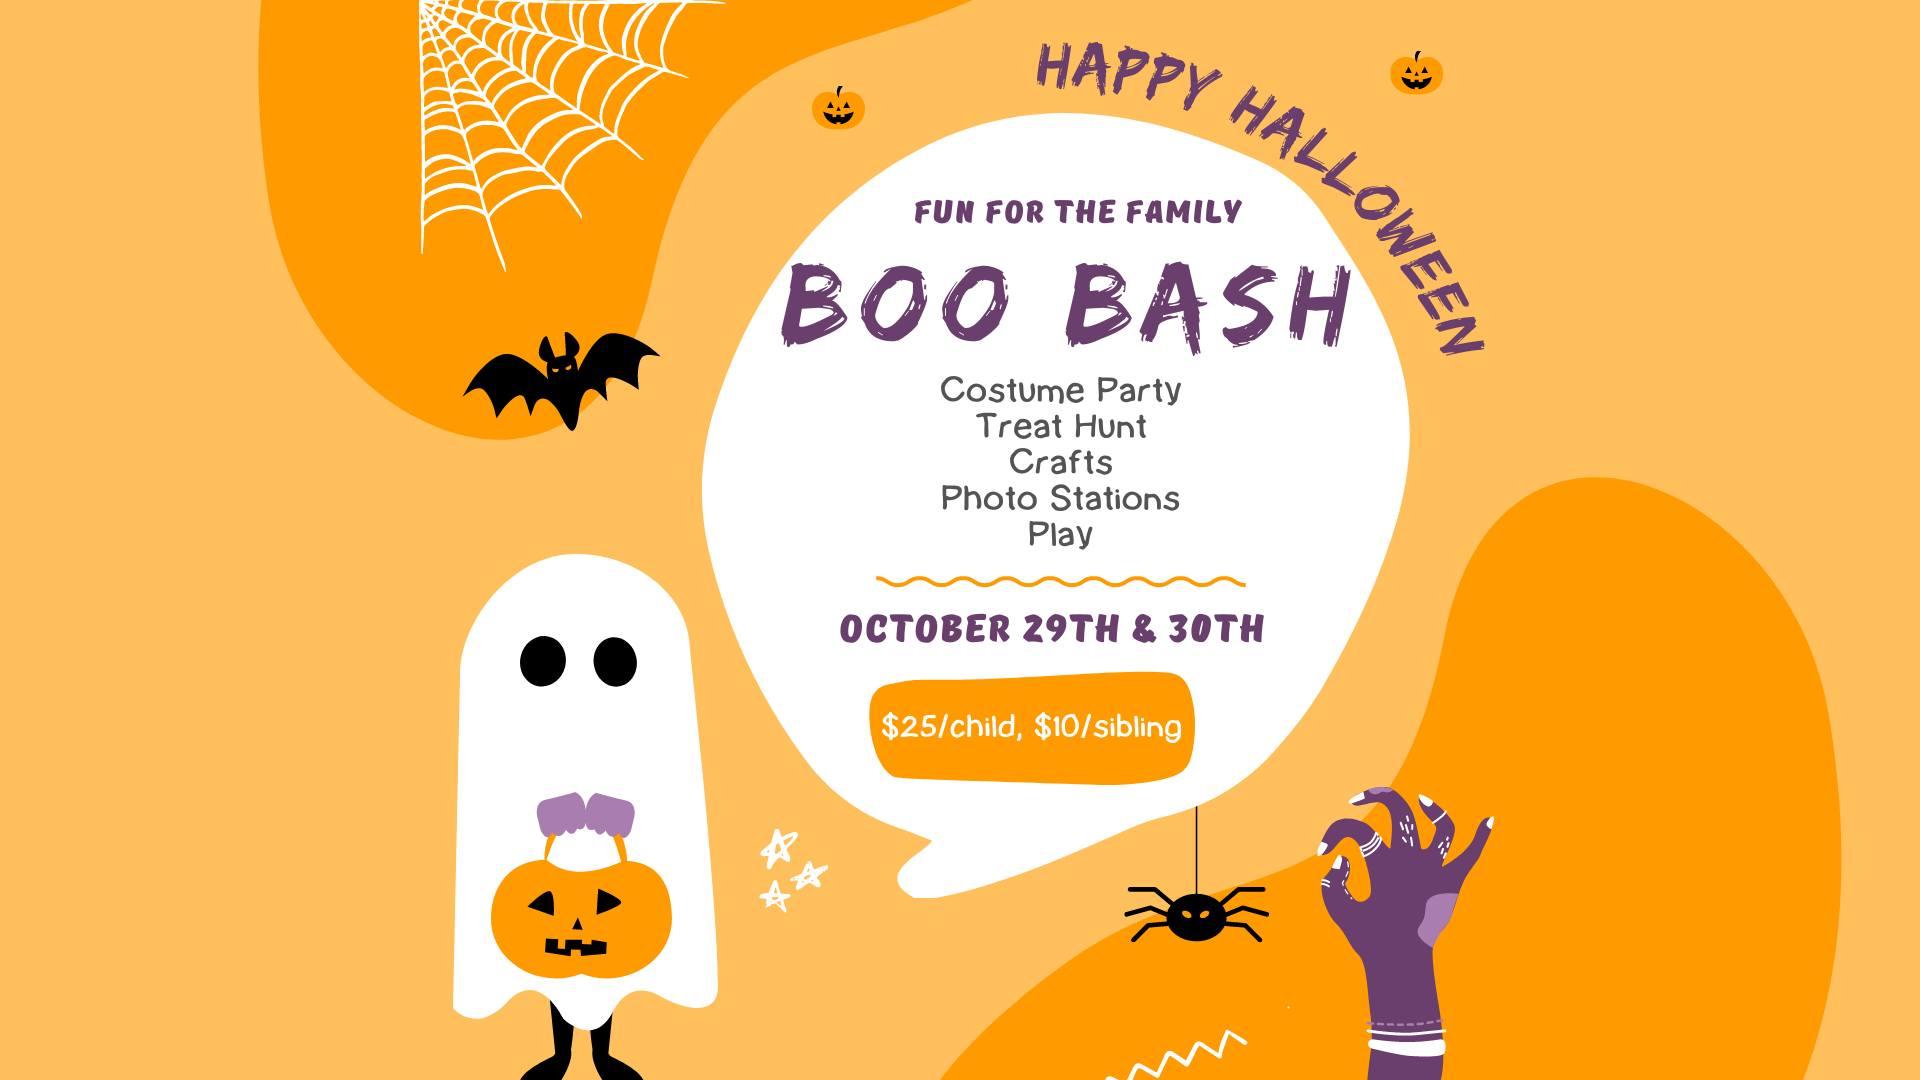 Halloween Boo Bash
Sat Oct 29, 8:00 AM - Sun Oct 30, 9:30 AM
in 9 days